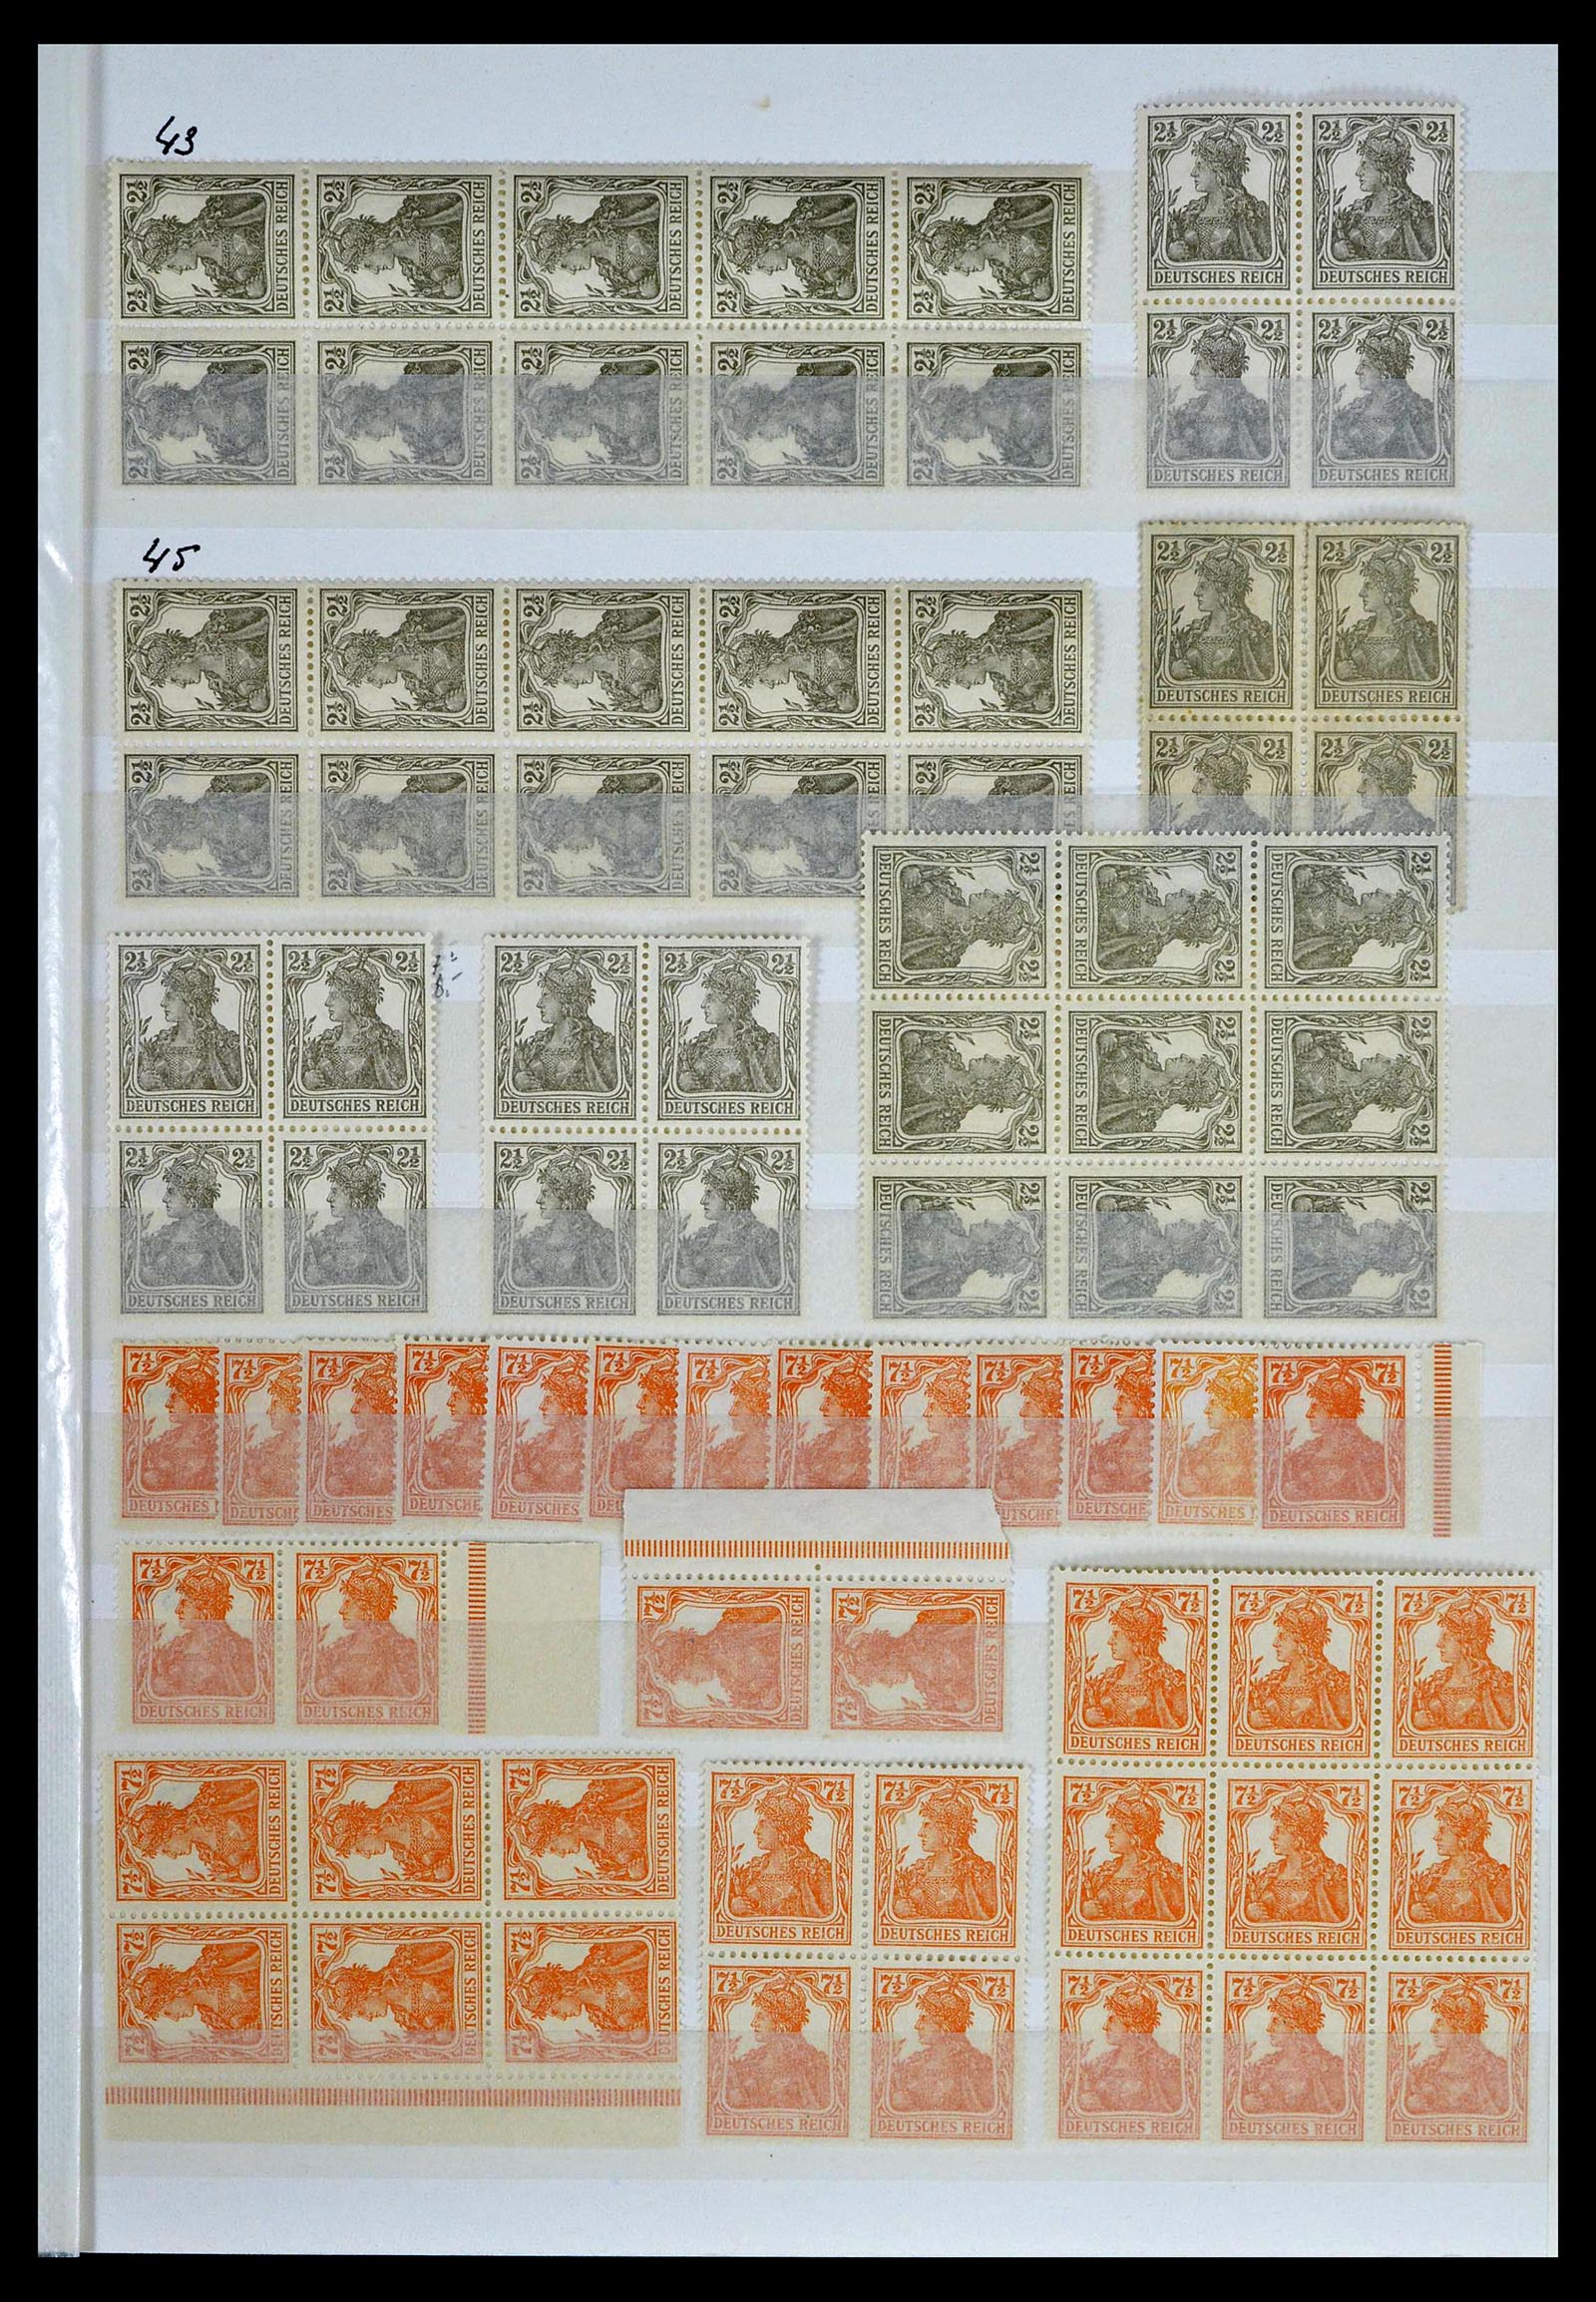 39256 0007 - Stamp collection 39256 German Reich MNH.